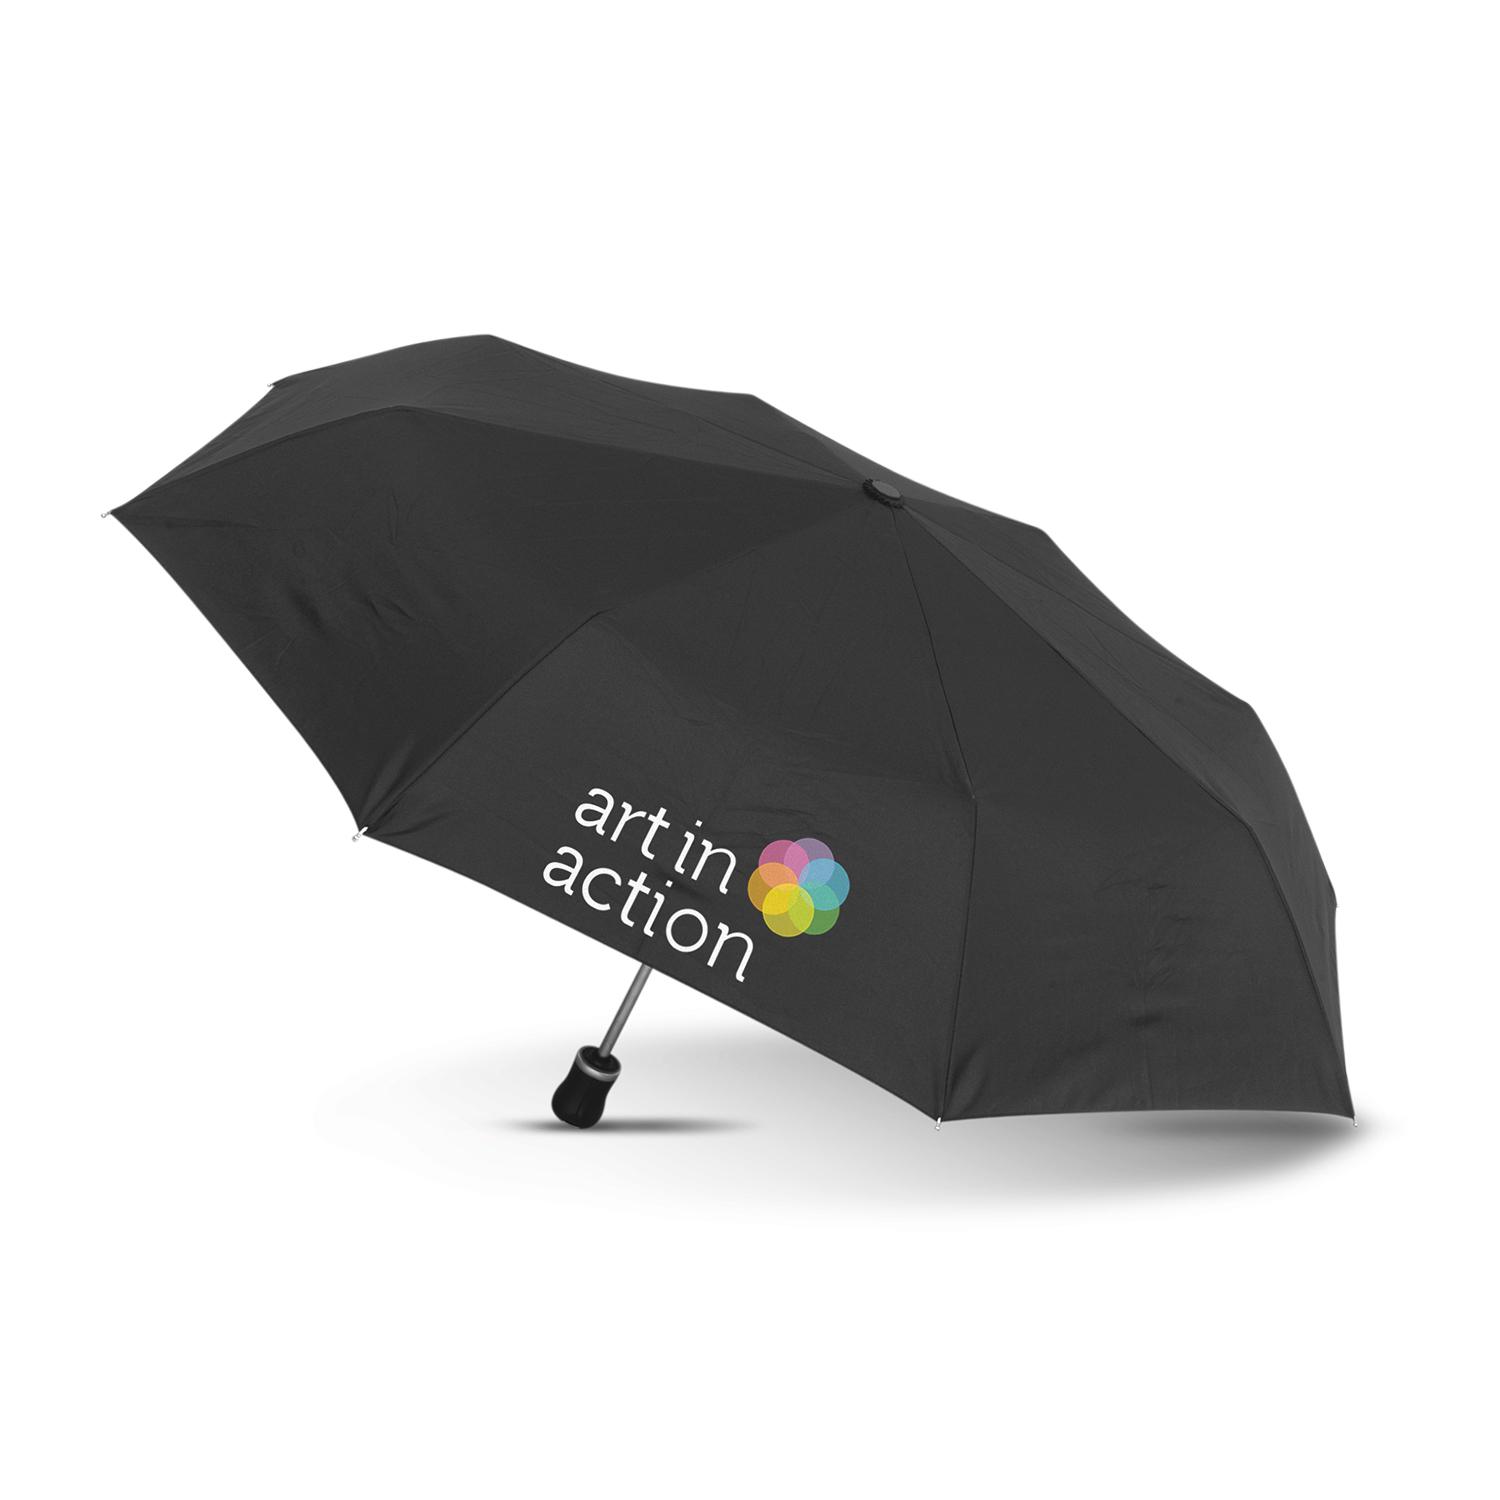 Newman Sheraton Compact Umbrella